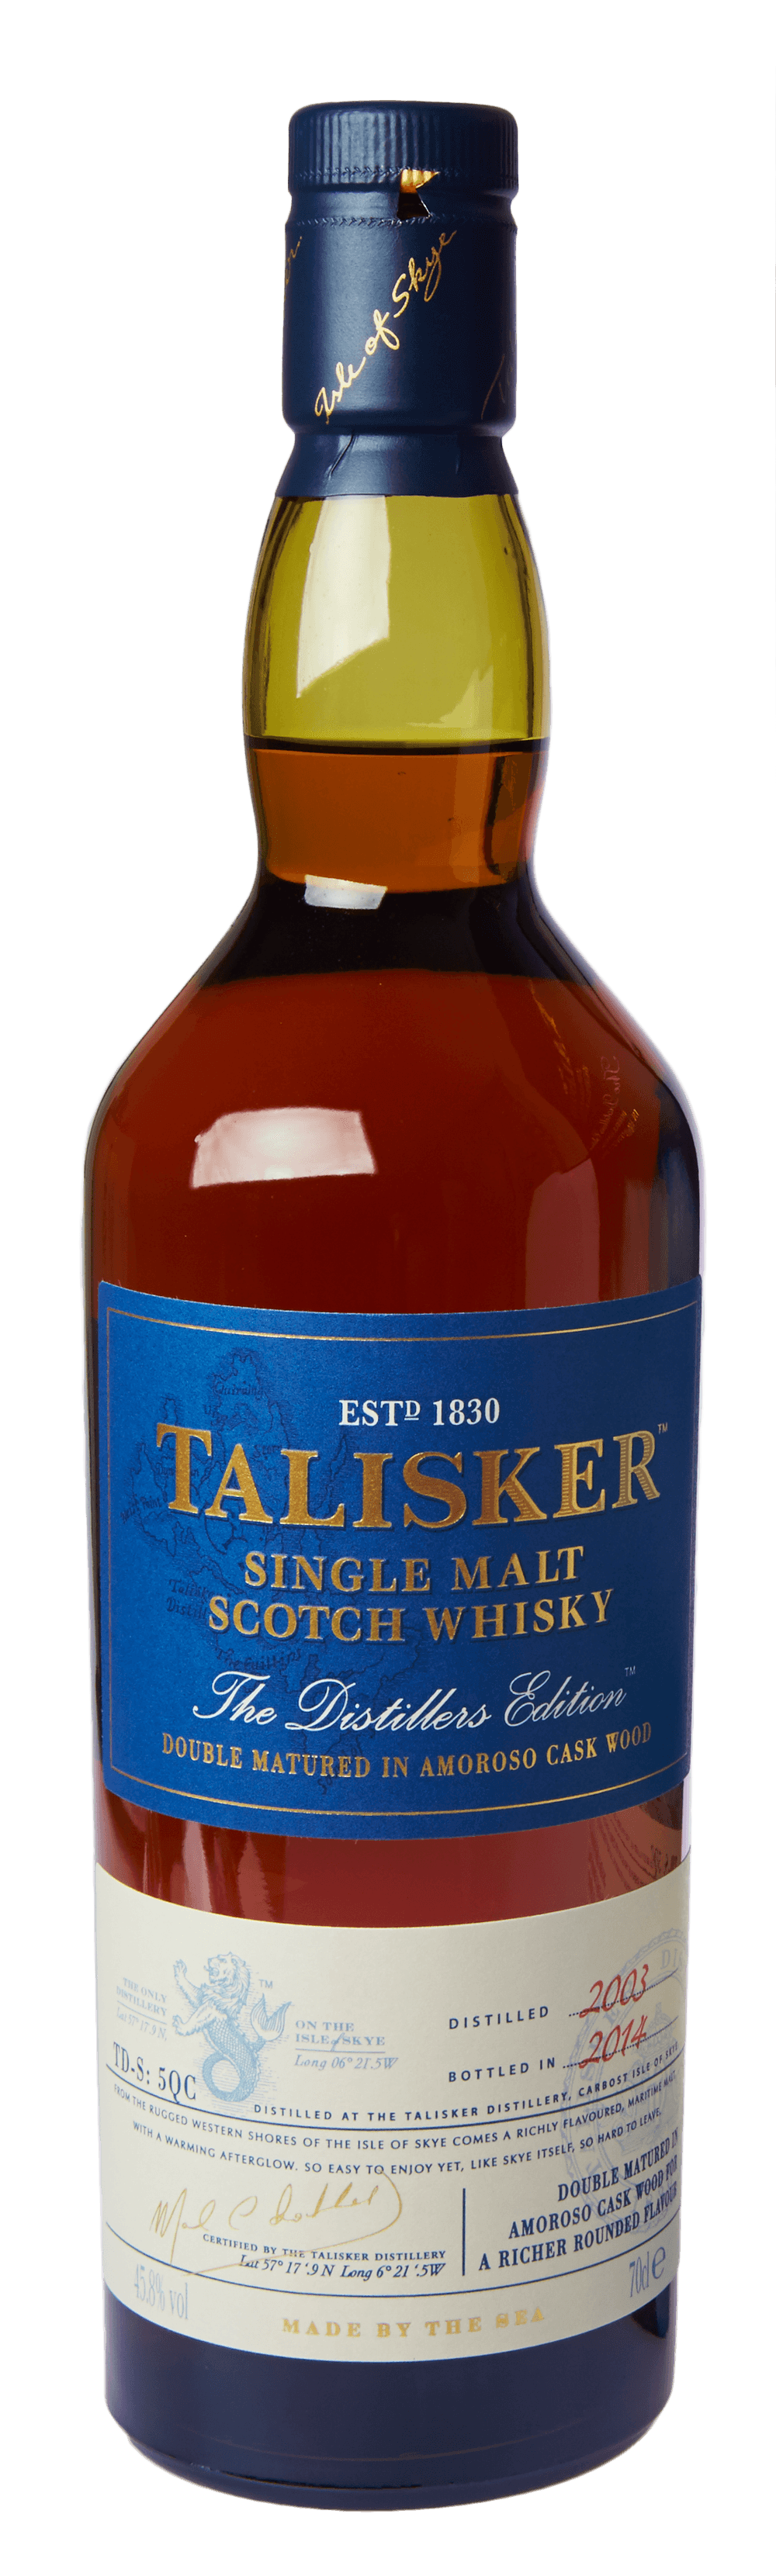 talisker-distillers-edition-2003-2014-458-prozent-2